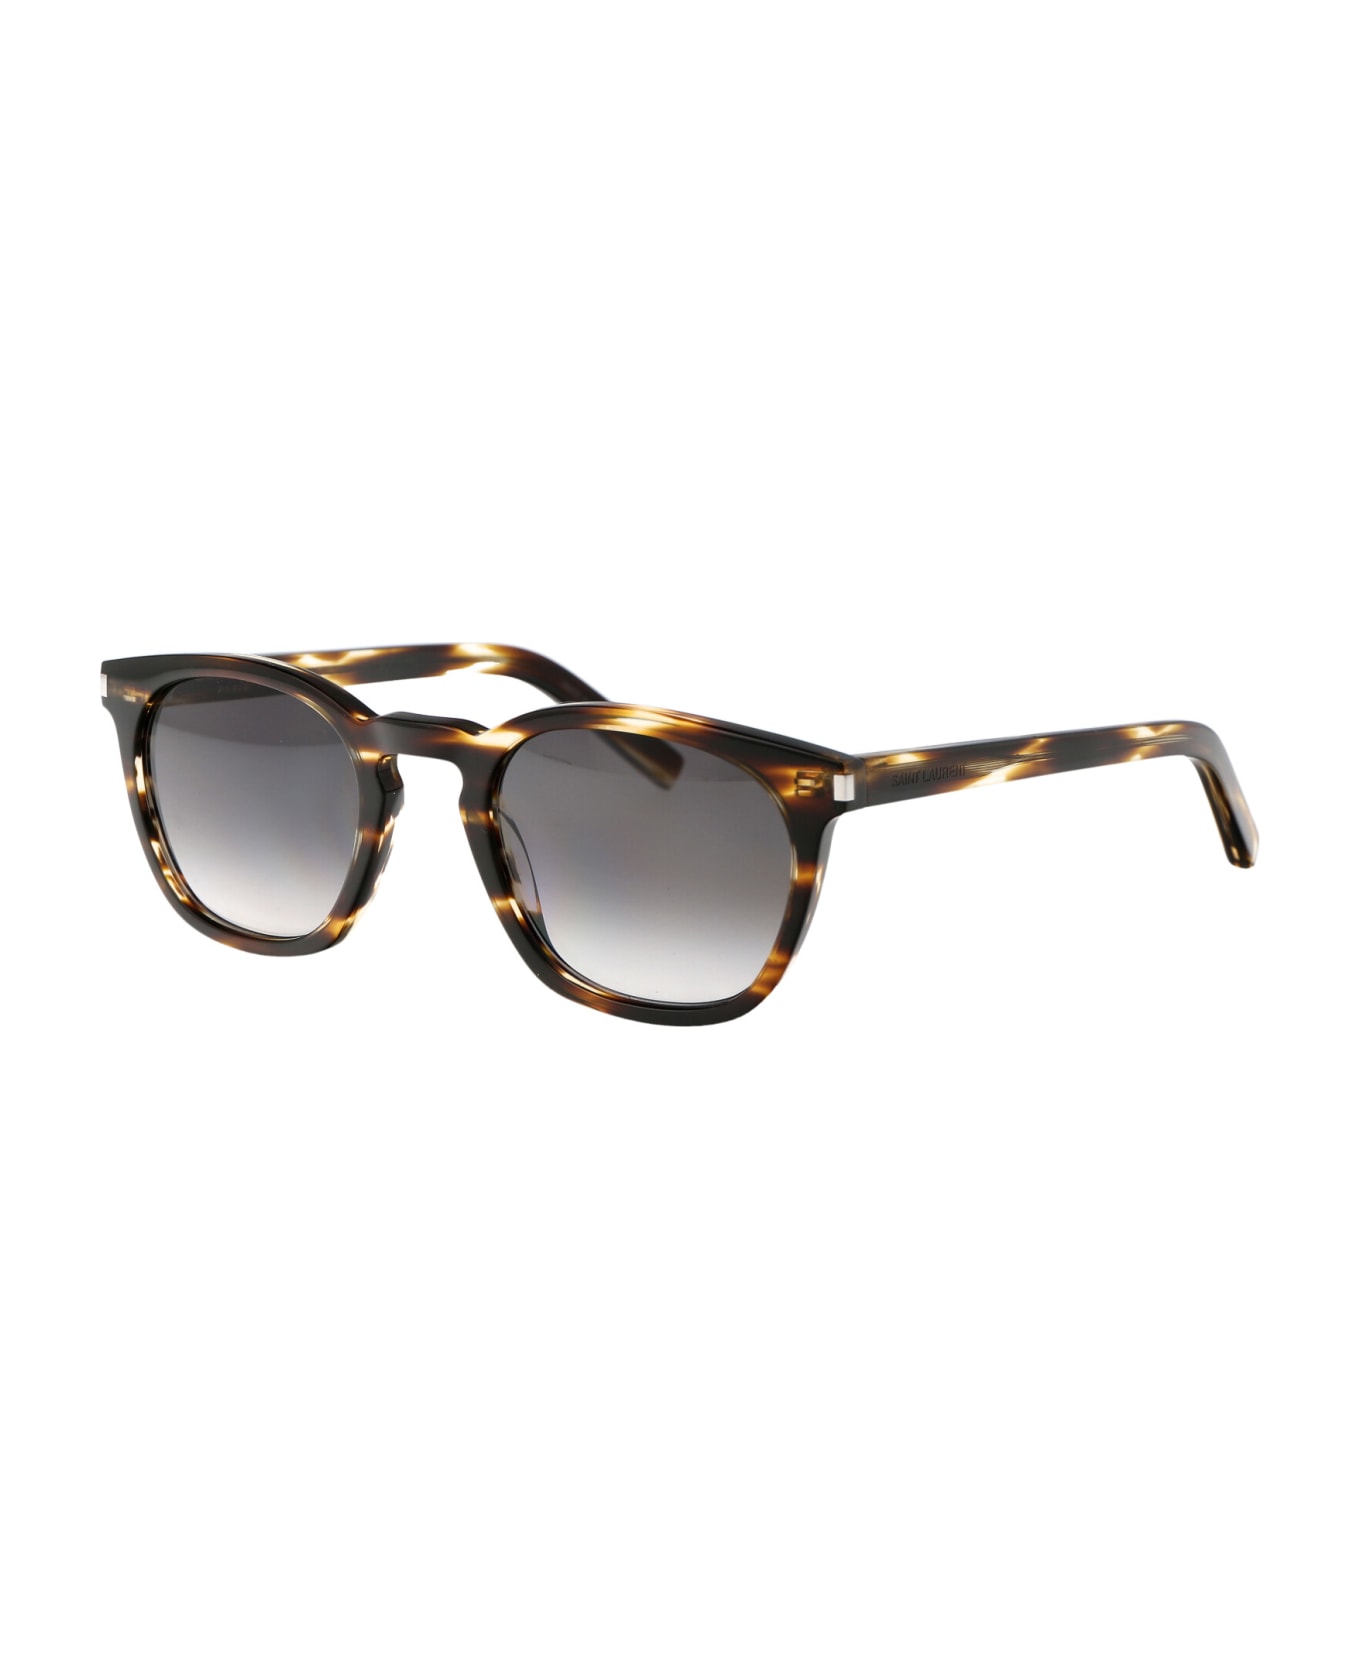 Saint Laurent Eyewear Sl 28 Sunglasses - 045 HAVANA HAVANA GREY